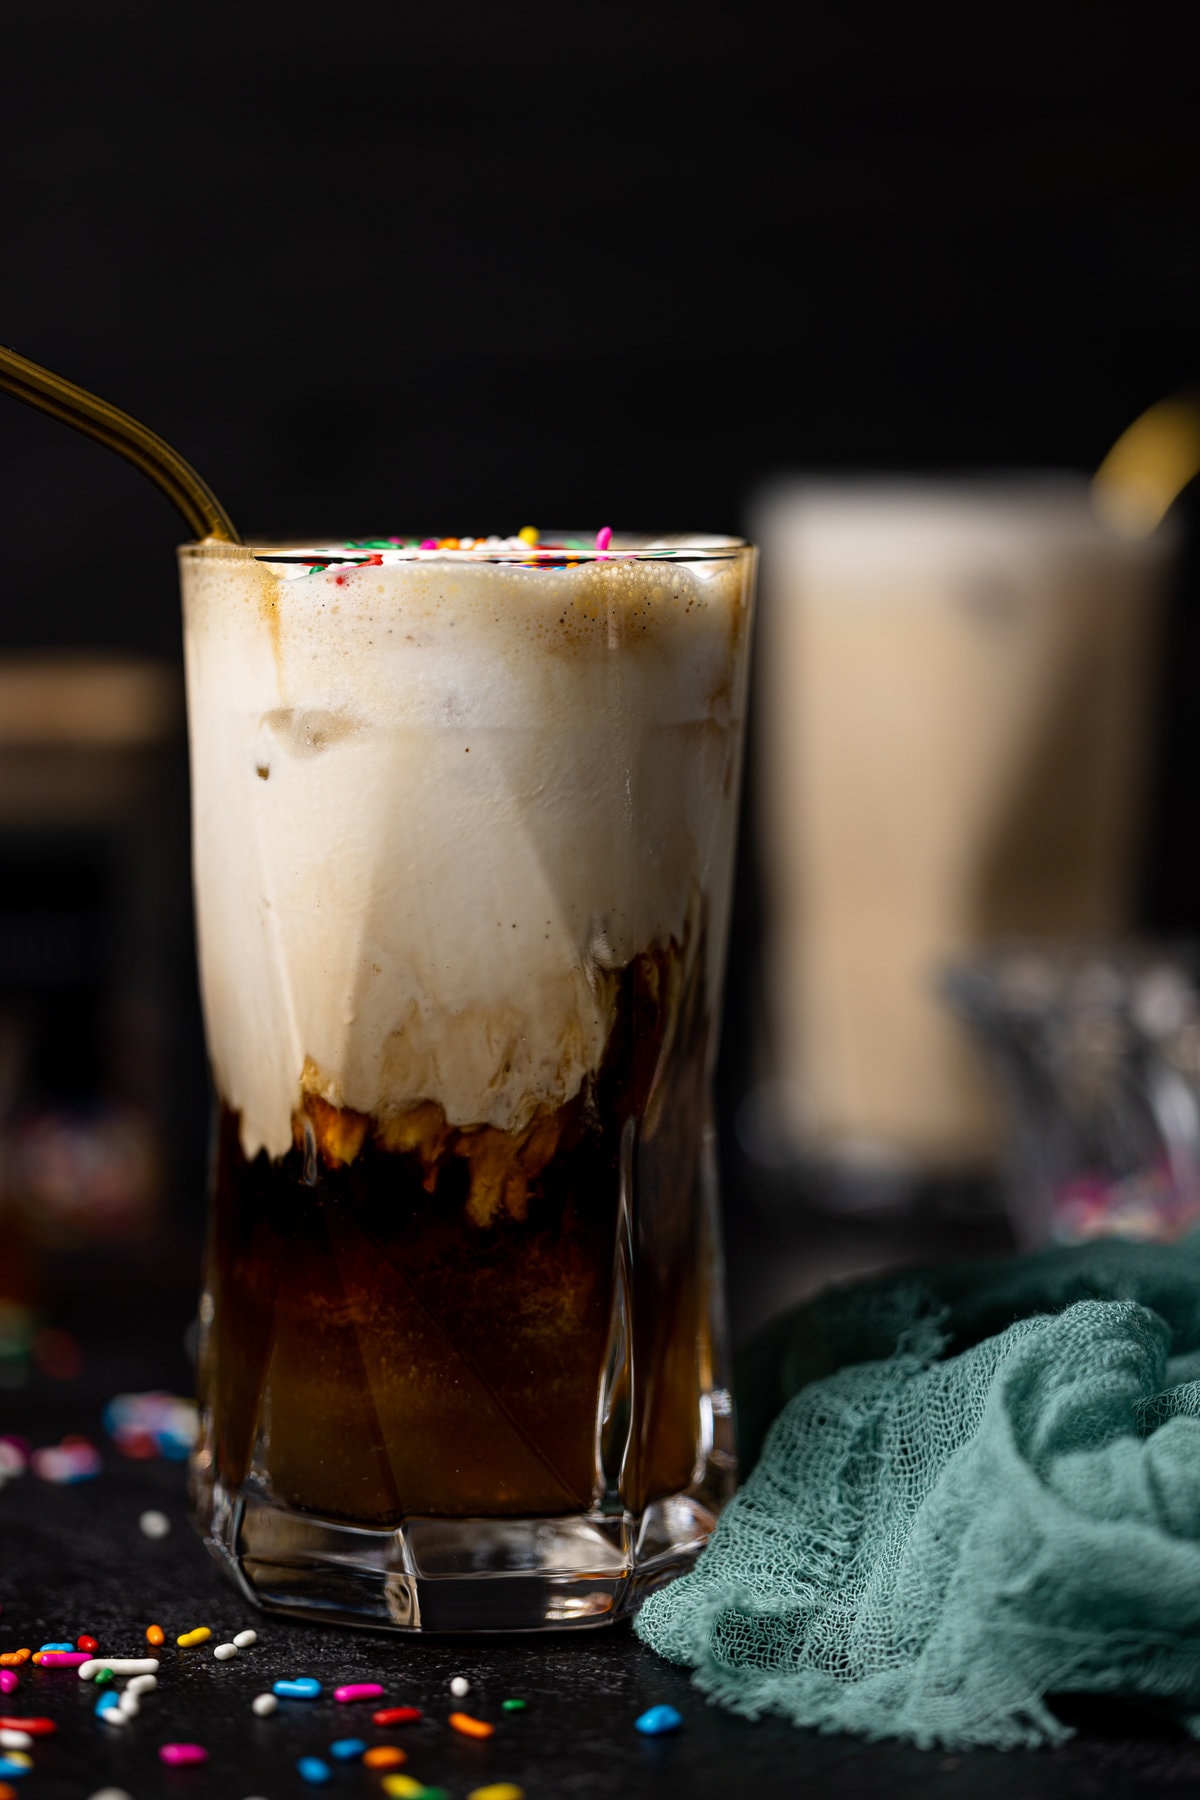 Vanilla Sweet Cream Cold Foam Coffee (Starbucks Copycat)